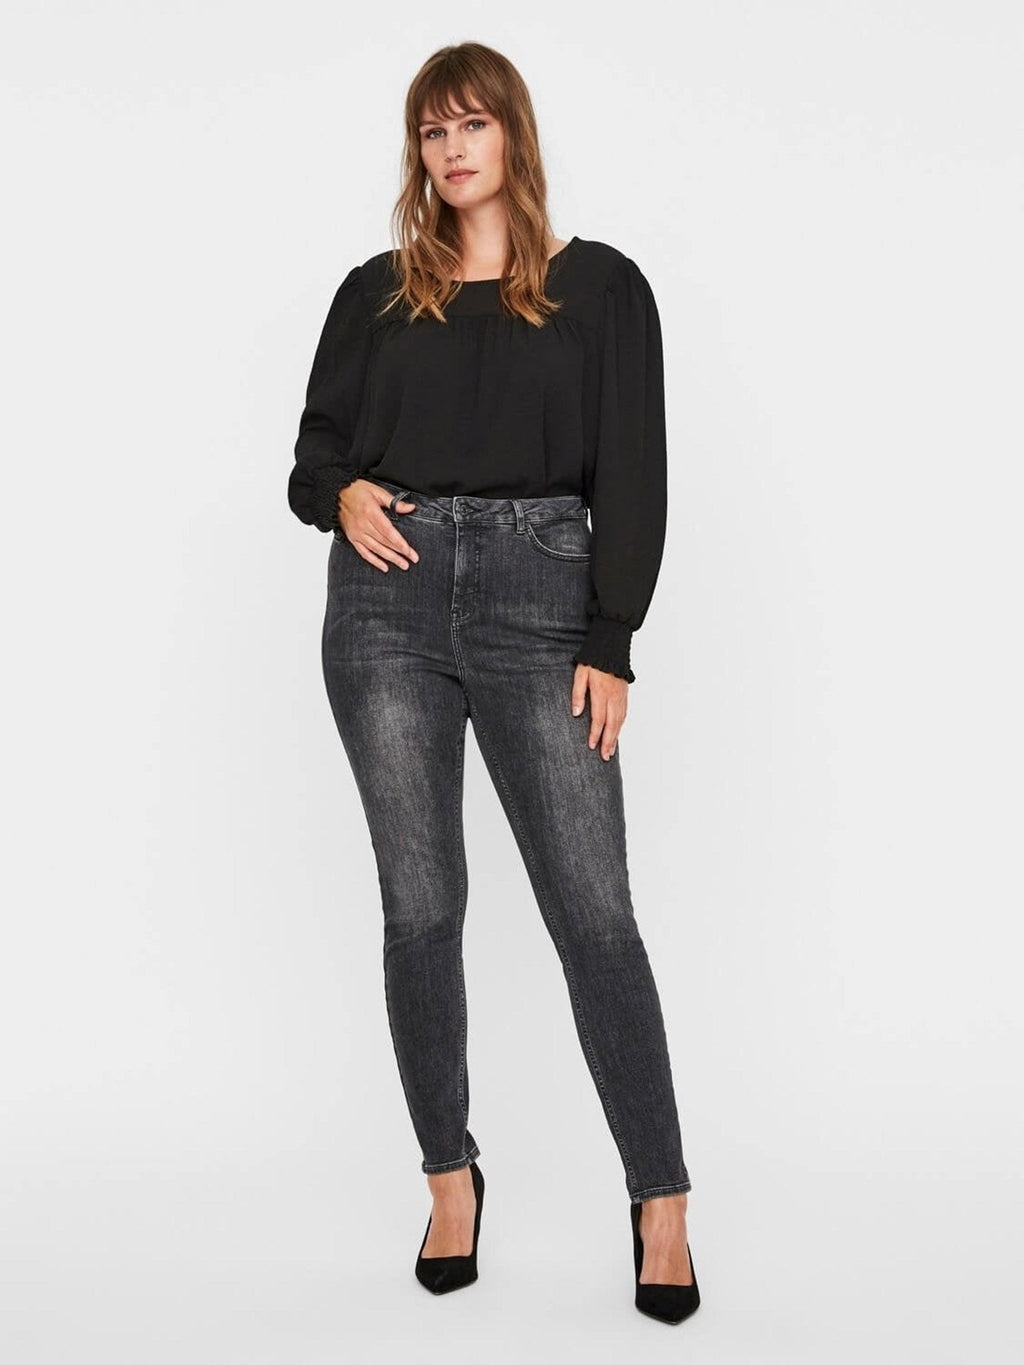 Lora jeans a vita alta (curva)-denim nera-grigio